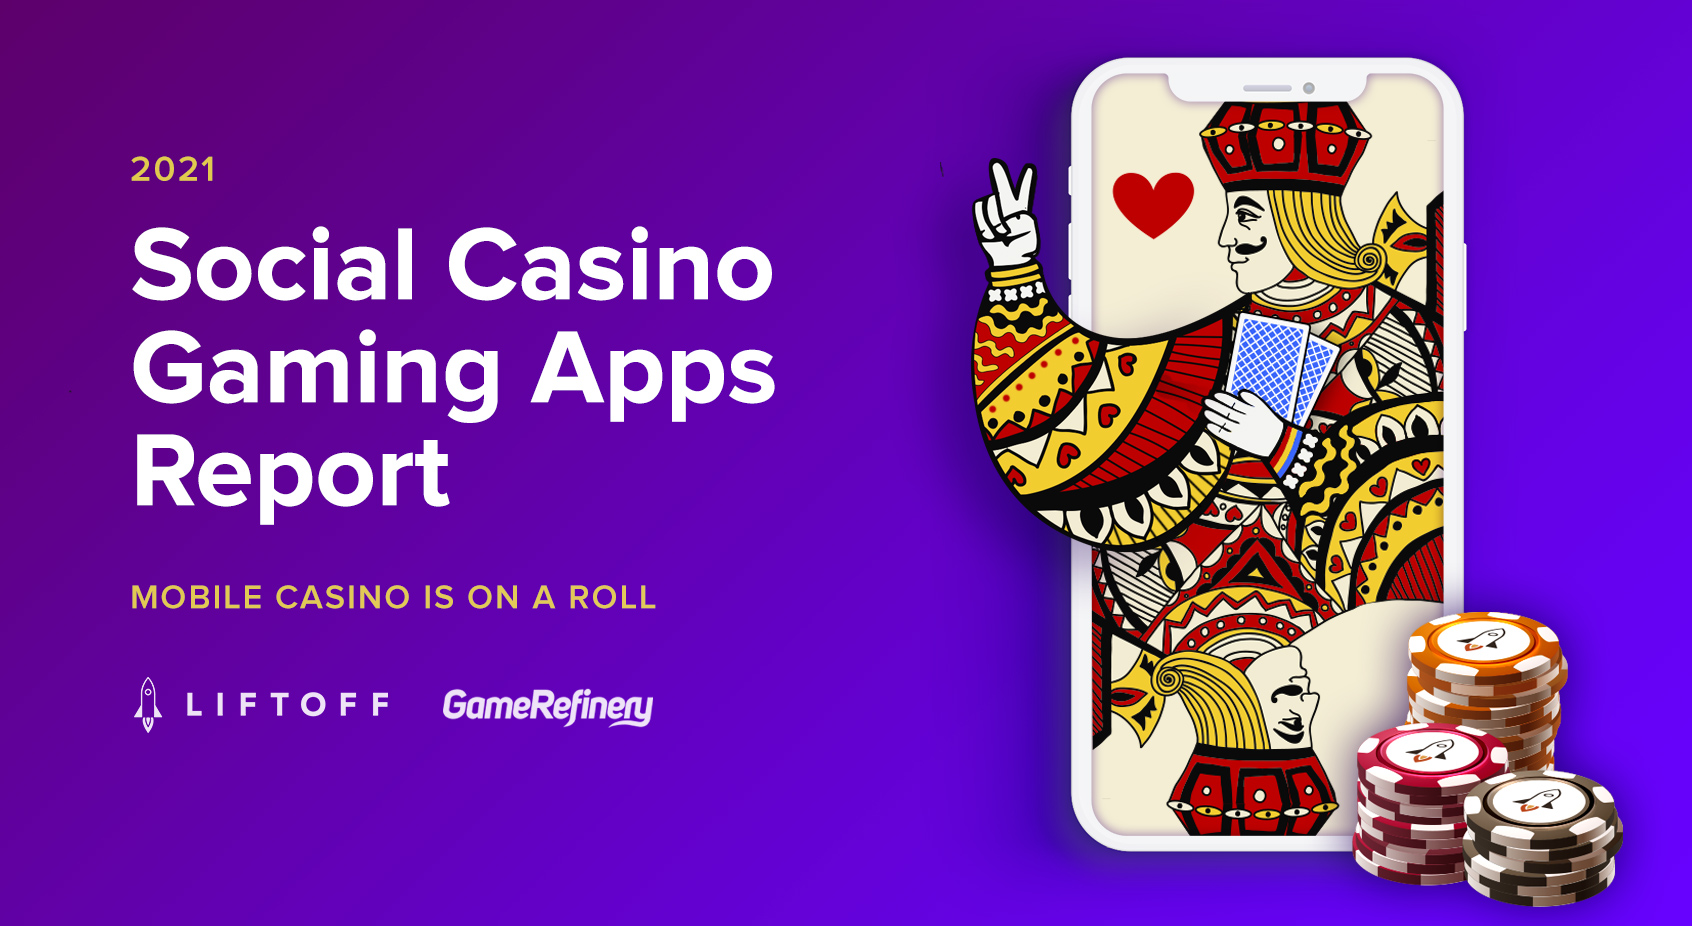 2021 Social Casino Gaming Apps Report